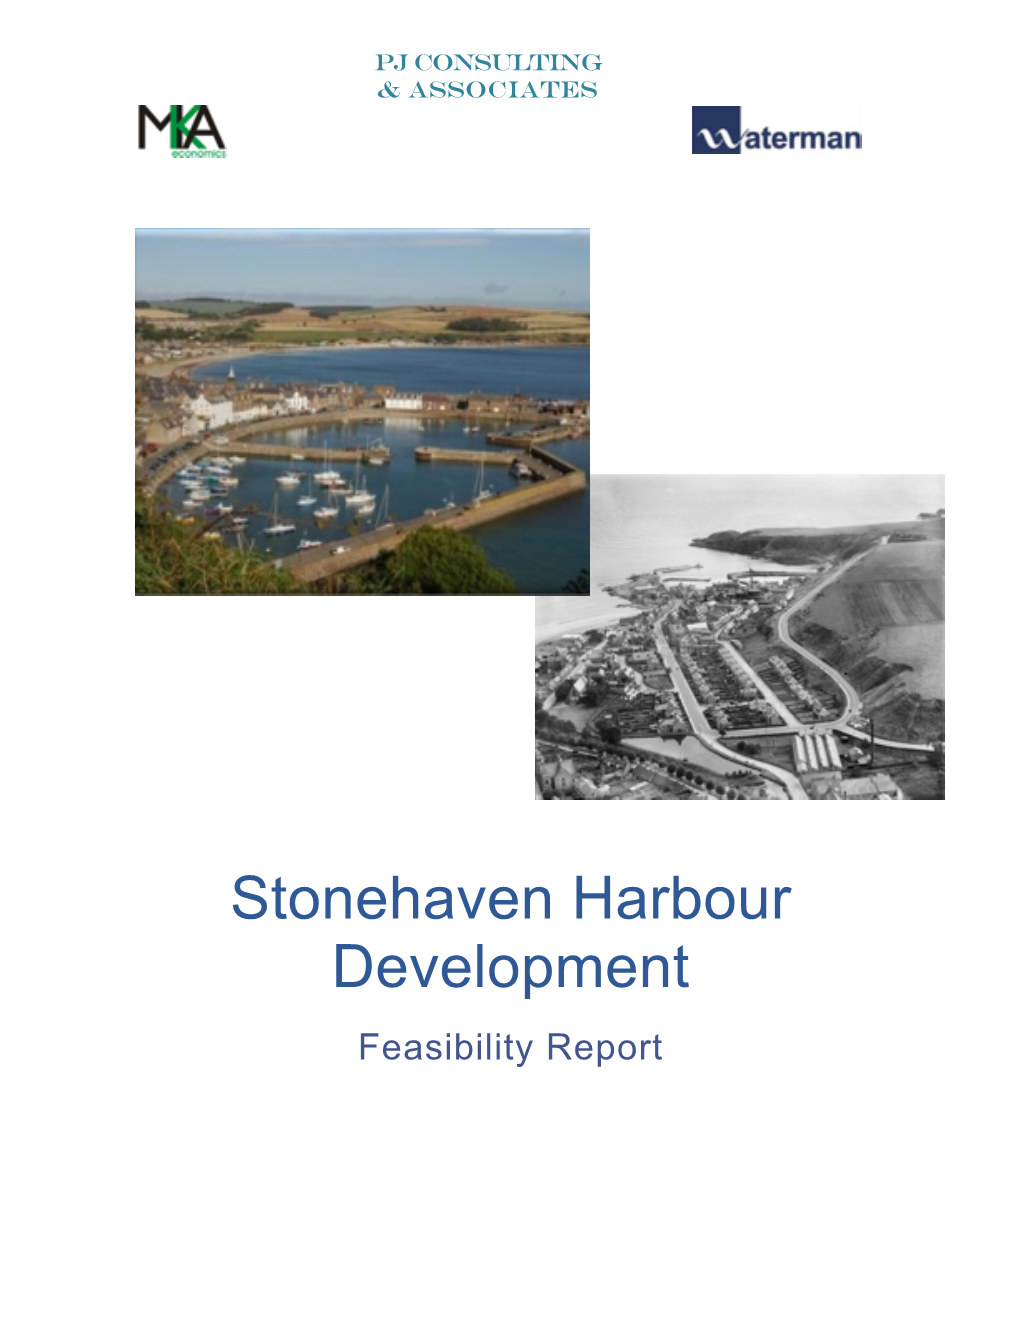 Stonehaven Harbour Development Feasibility Report